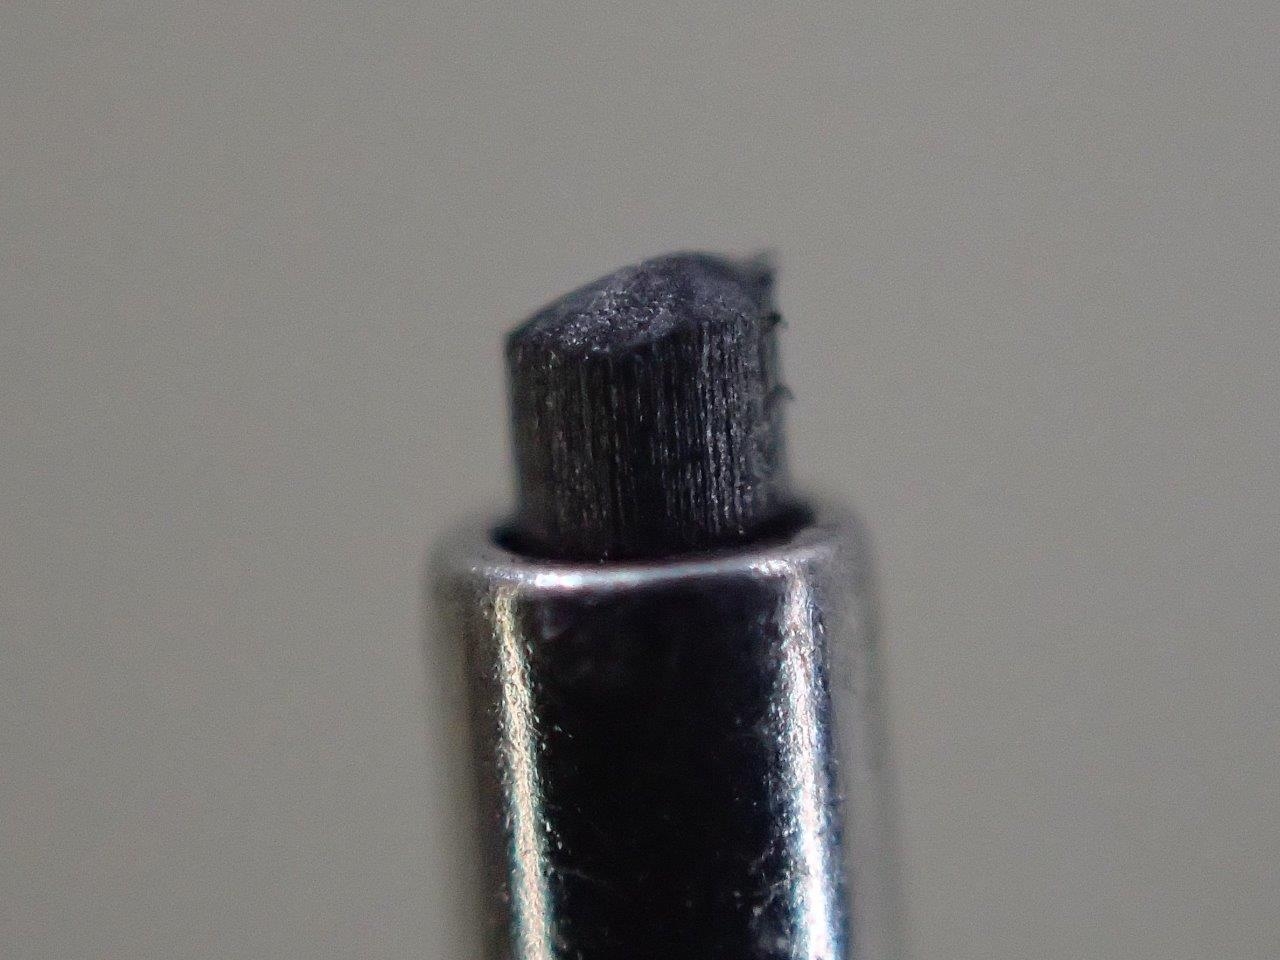 Tough TG-6の顕微鏡モードで撮影した0.5mmのシャープペンシルの先端。身近な被写体を撮影してみると意外な発見がある （撮影：稲垣宗彦）